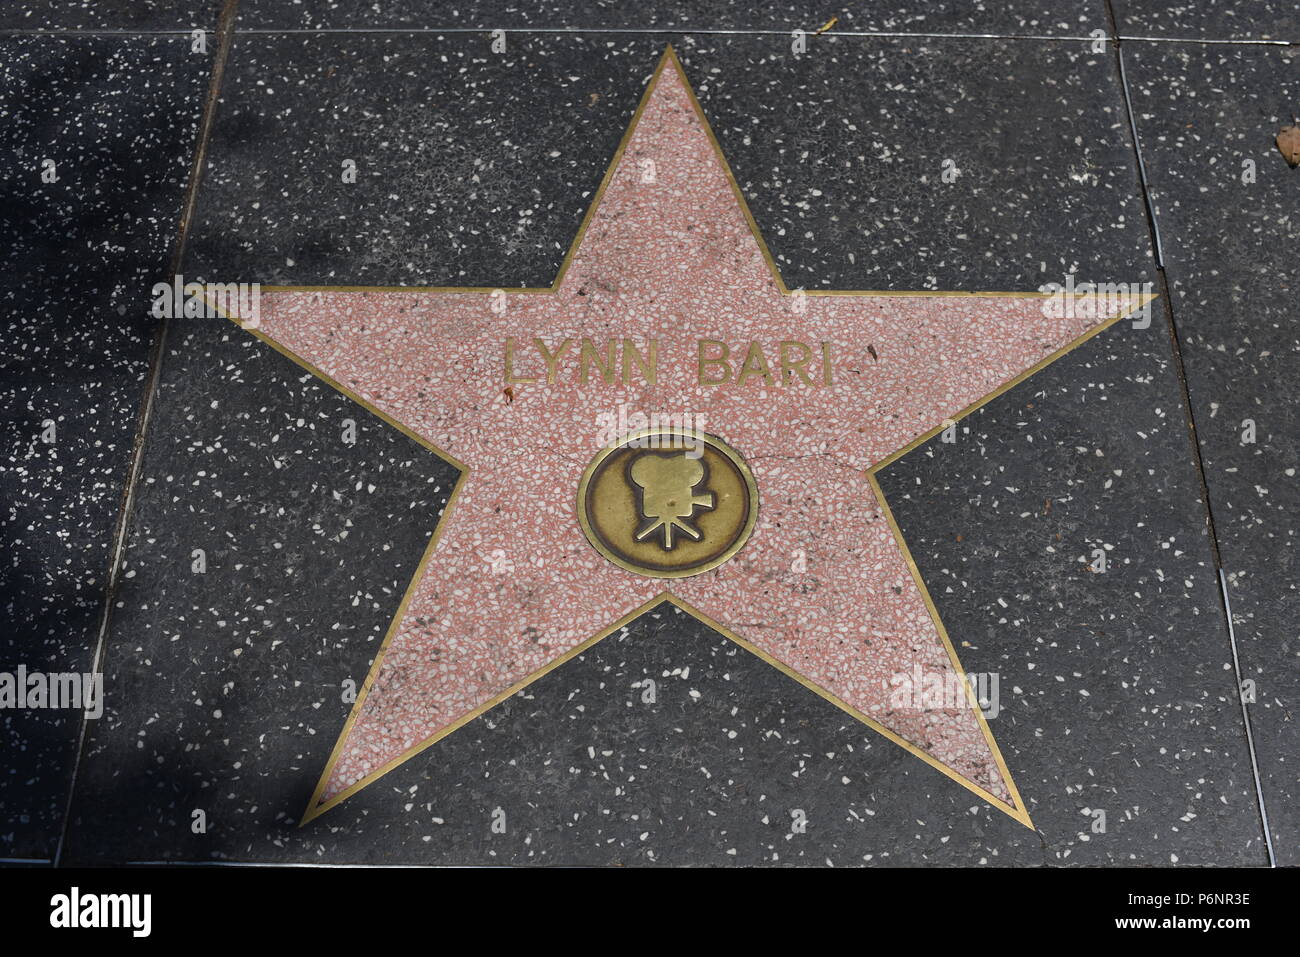 HOLLYWOOD, CA - 29 Giugno: Lynn Bari stella sulla Hollywood Walk of Fame in Hollywood, la California il 29 giugno 2018. Foto Stock